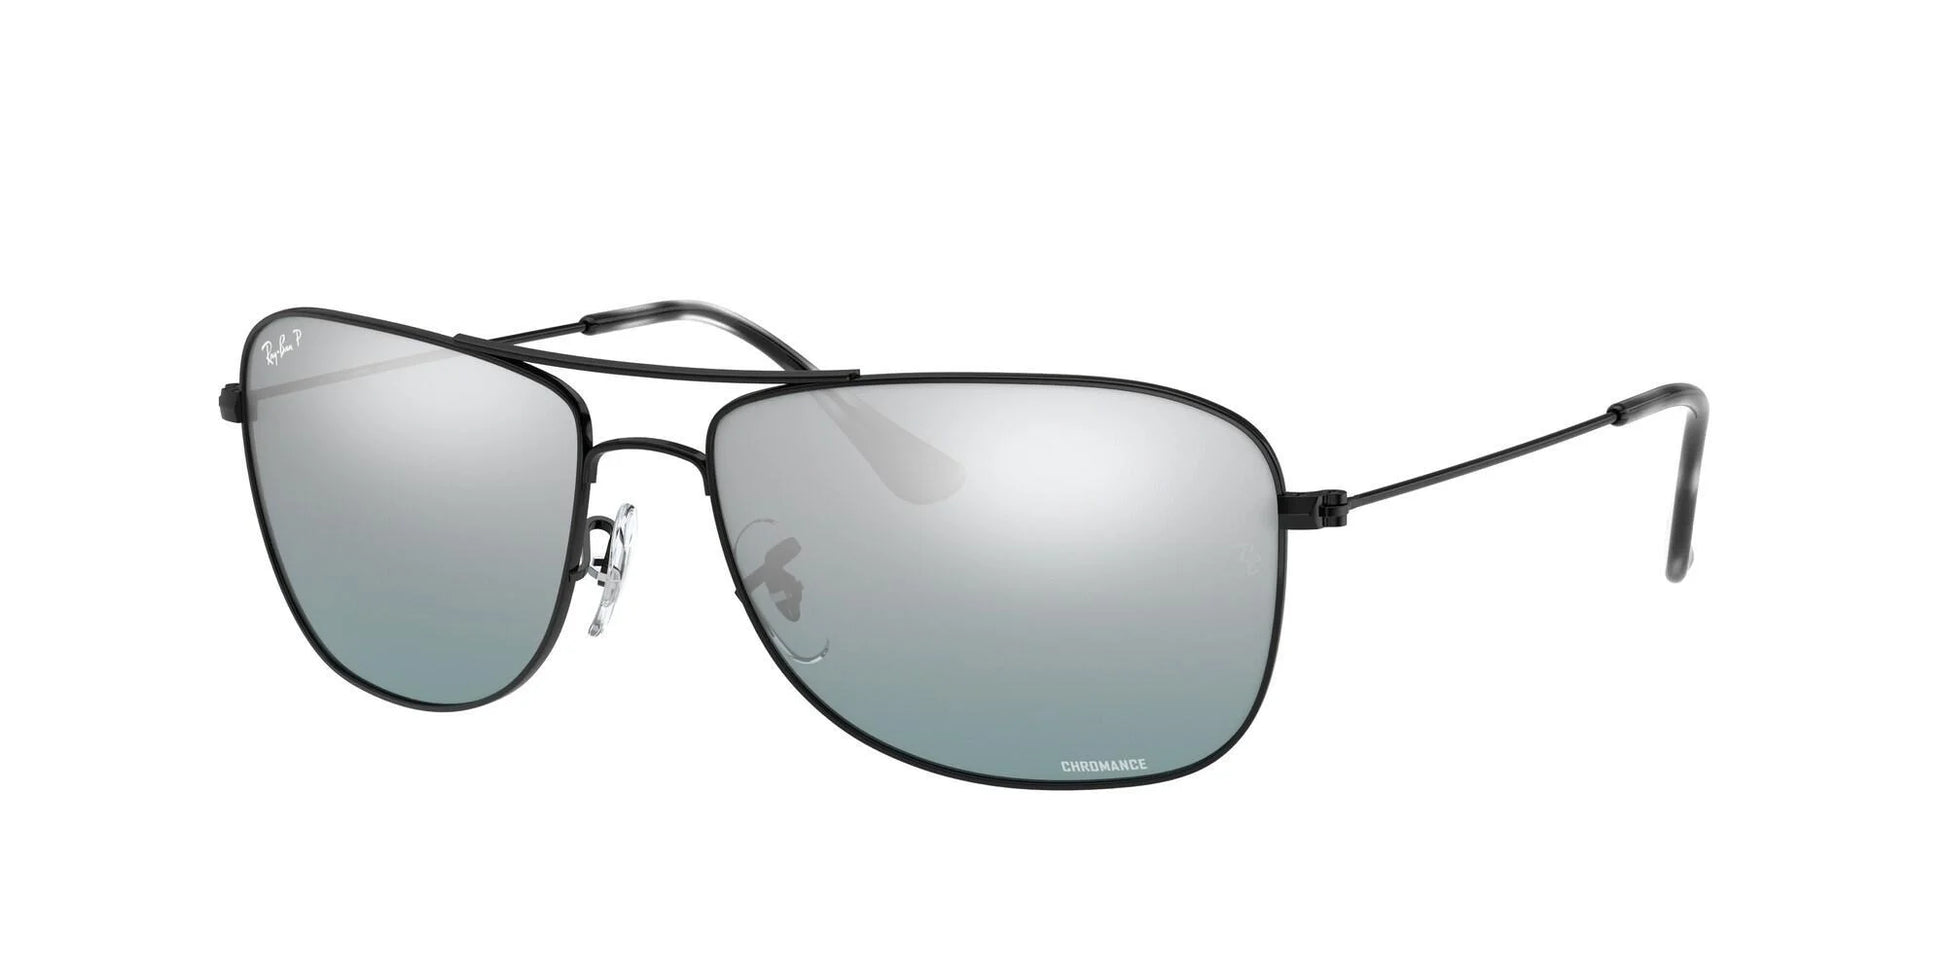 Ray-Ban RB3543 Sunglasses Black / Grey (Polarized)